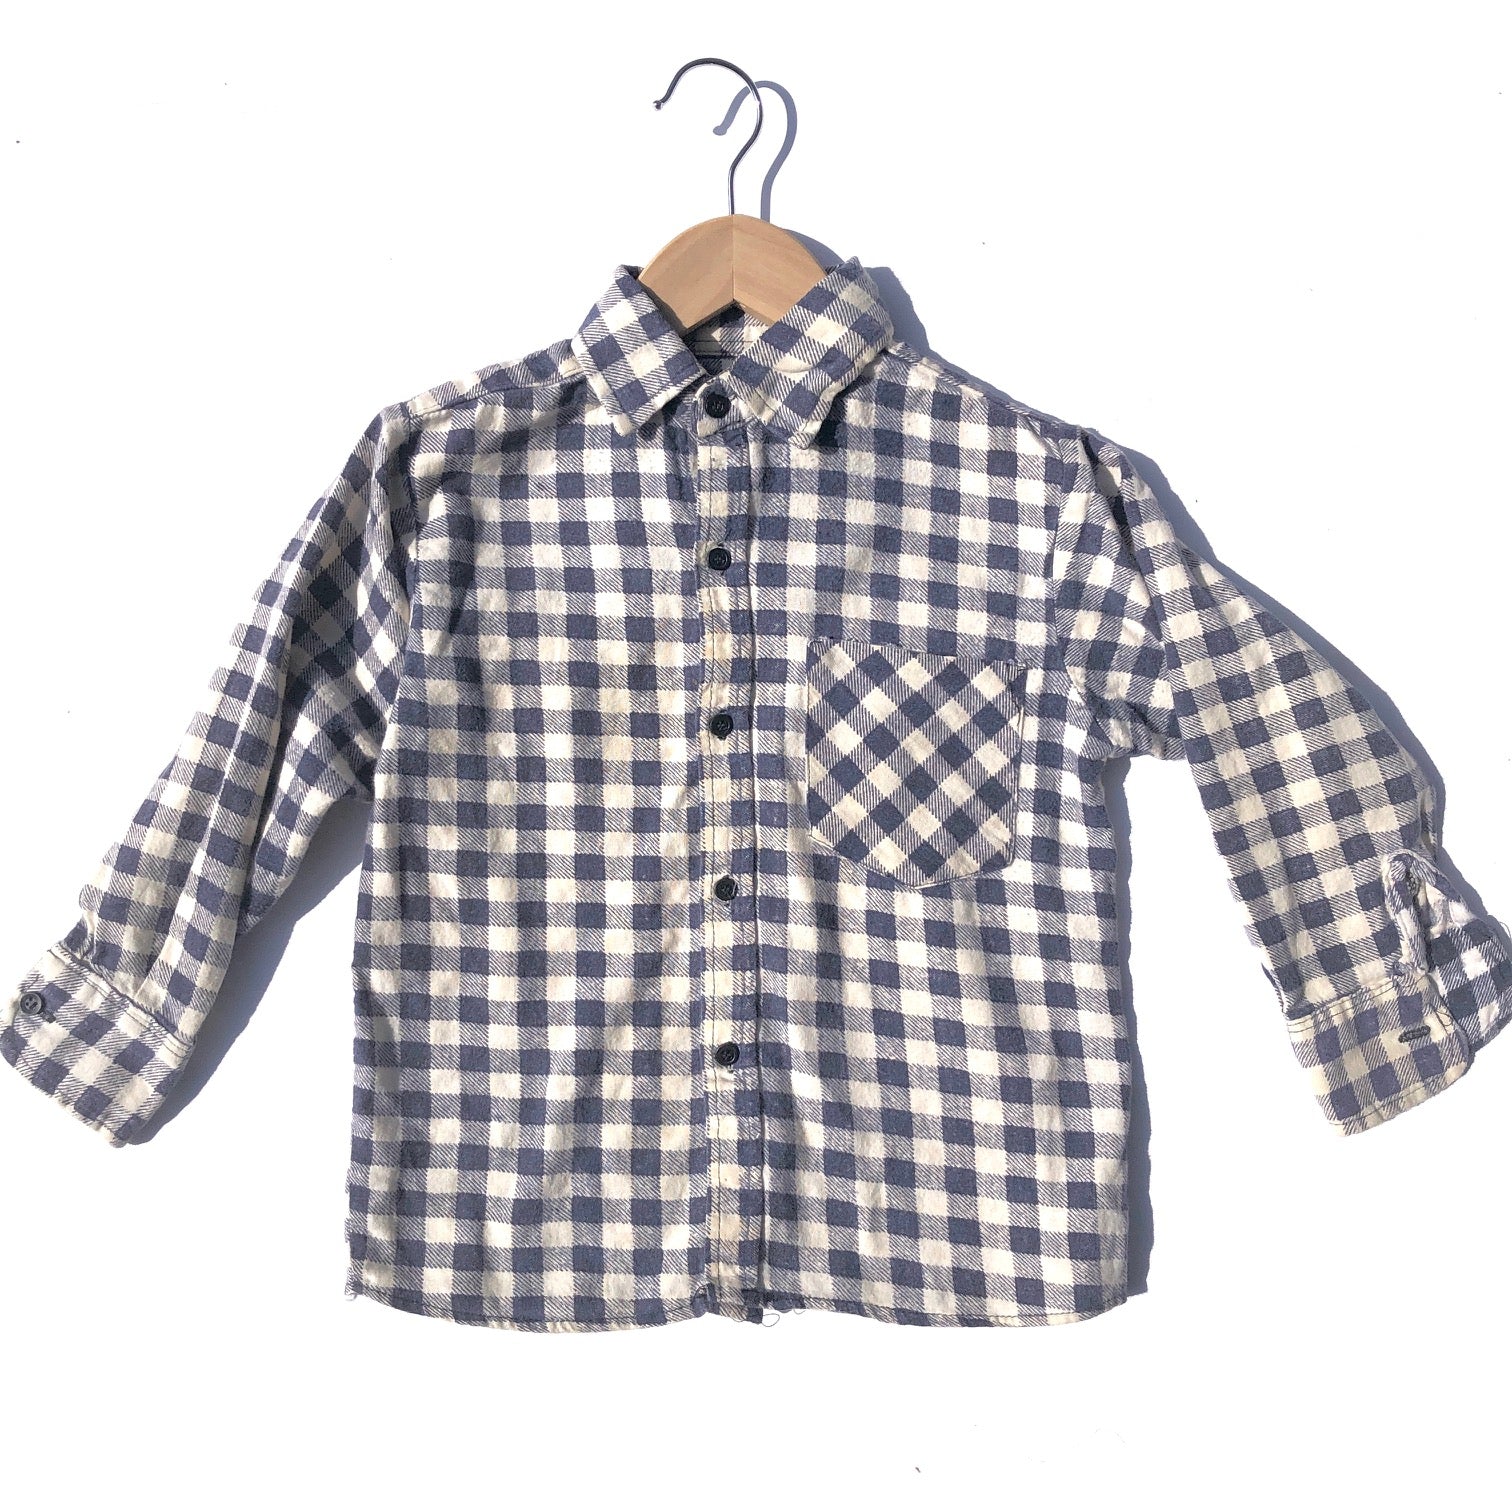 Vintage Check Flannel Shirt size 3-4